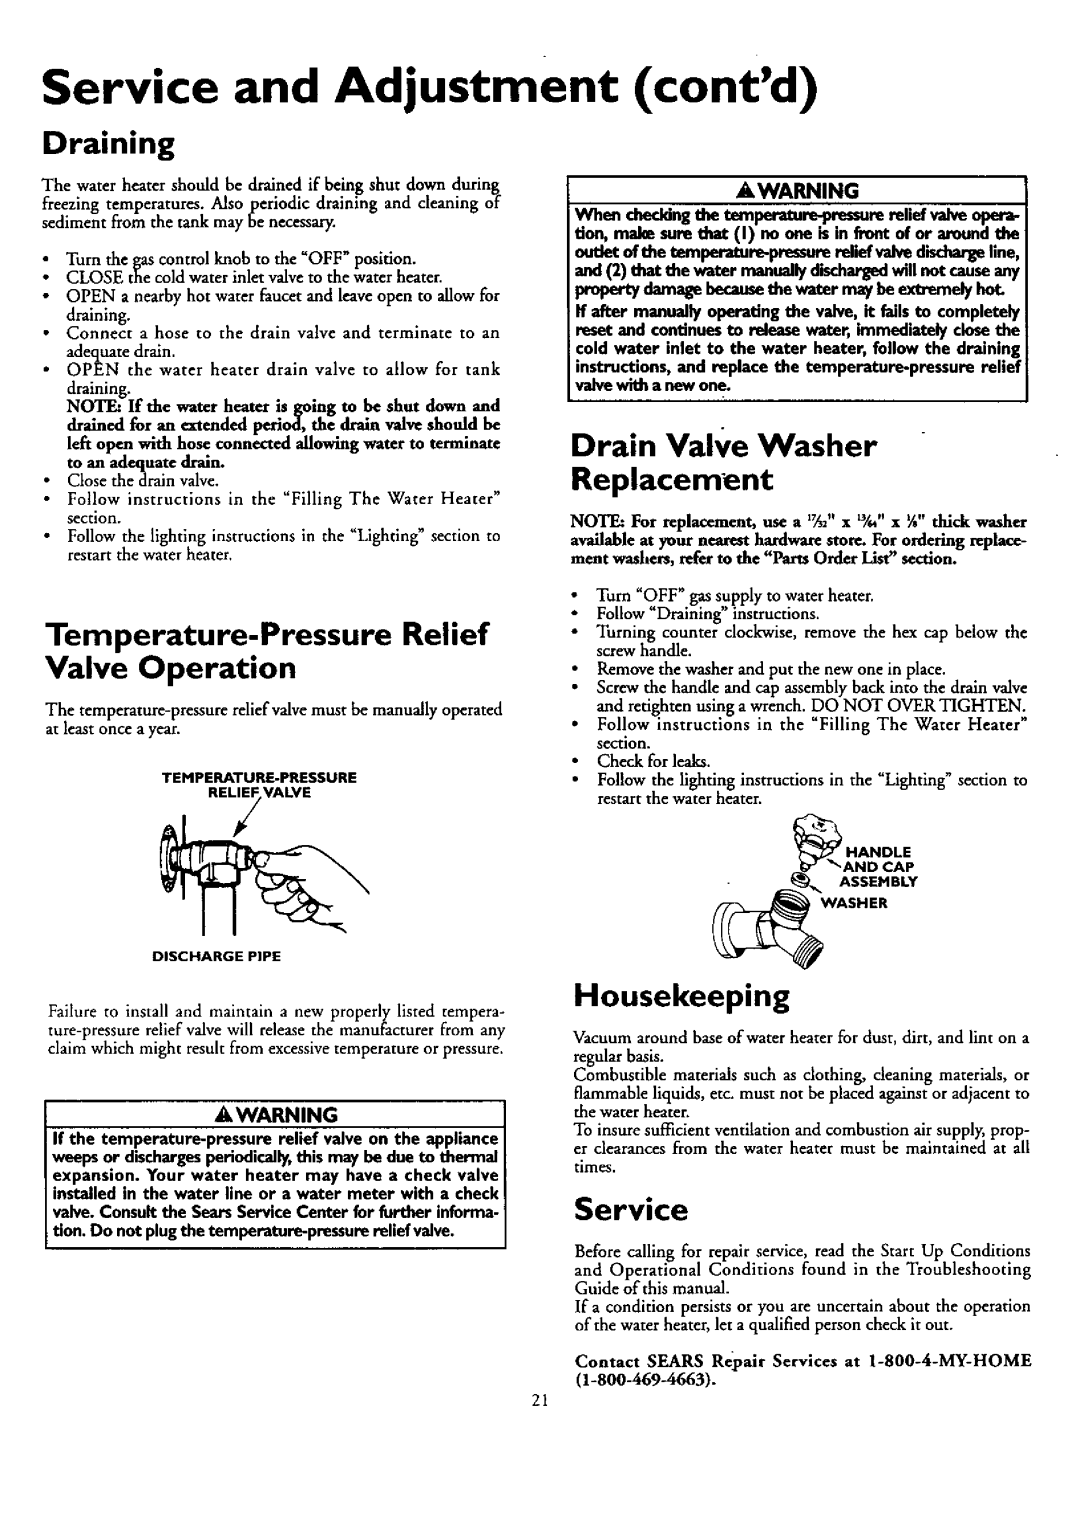 Kenmore 153.330401 Service and Adjustment contd, Draining, Temperature-PressureRelief, Drain Valve Washer Replacement 